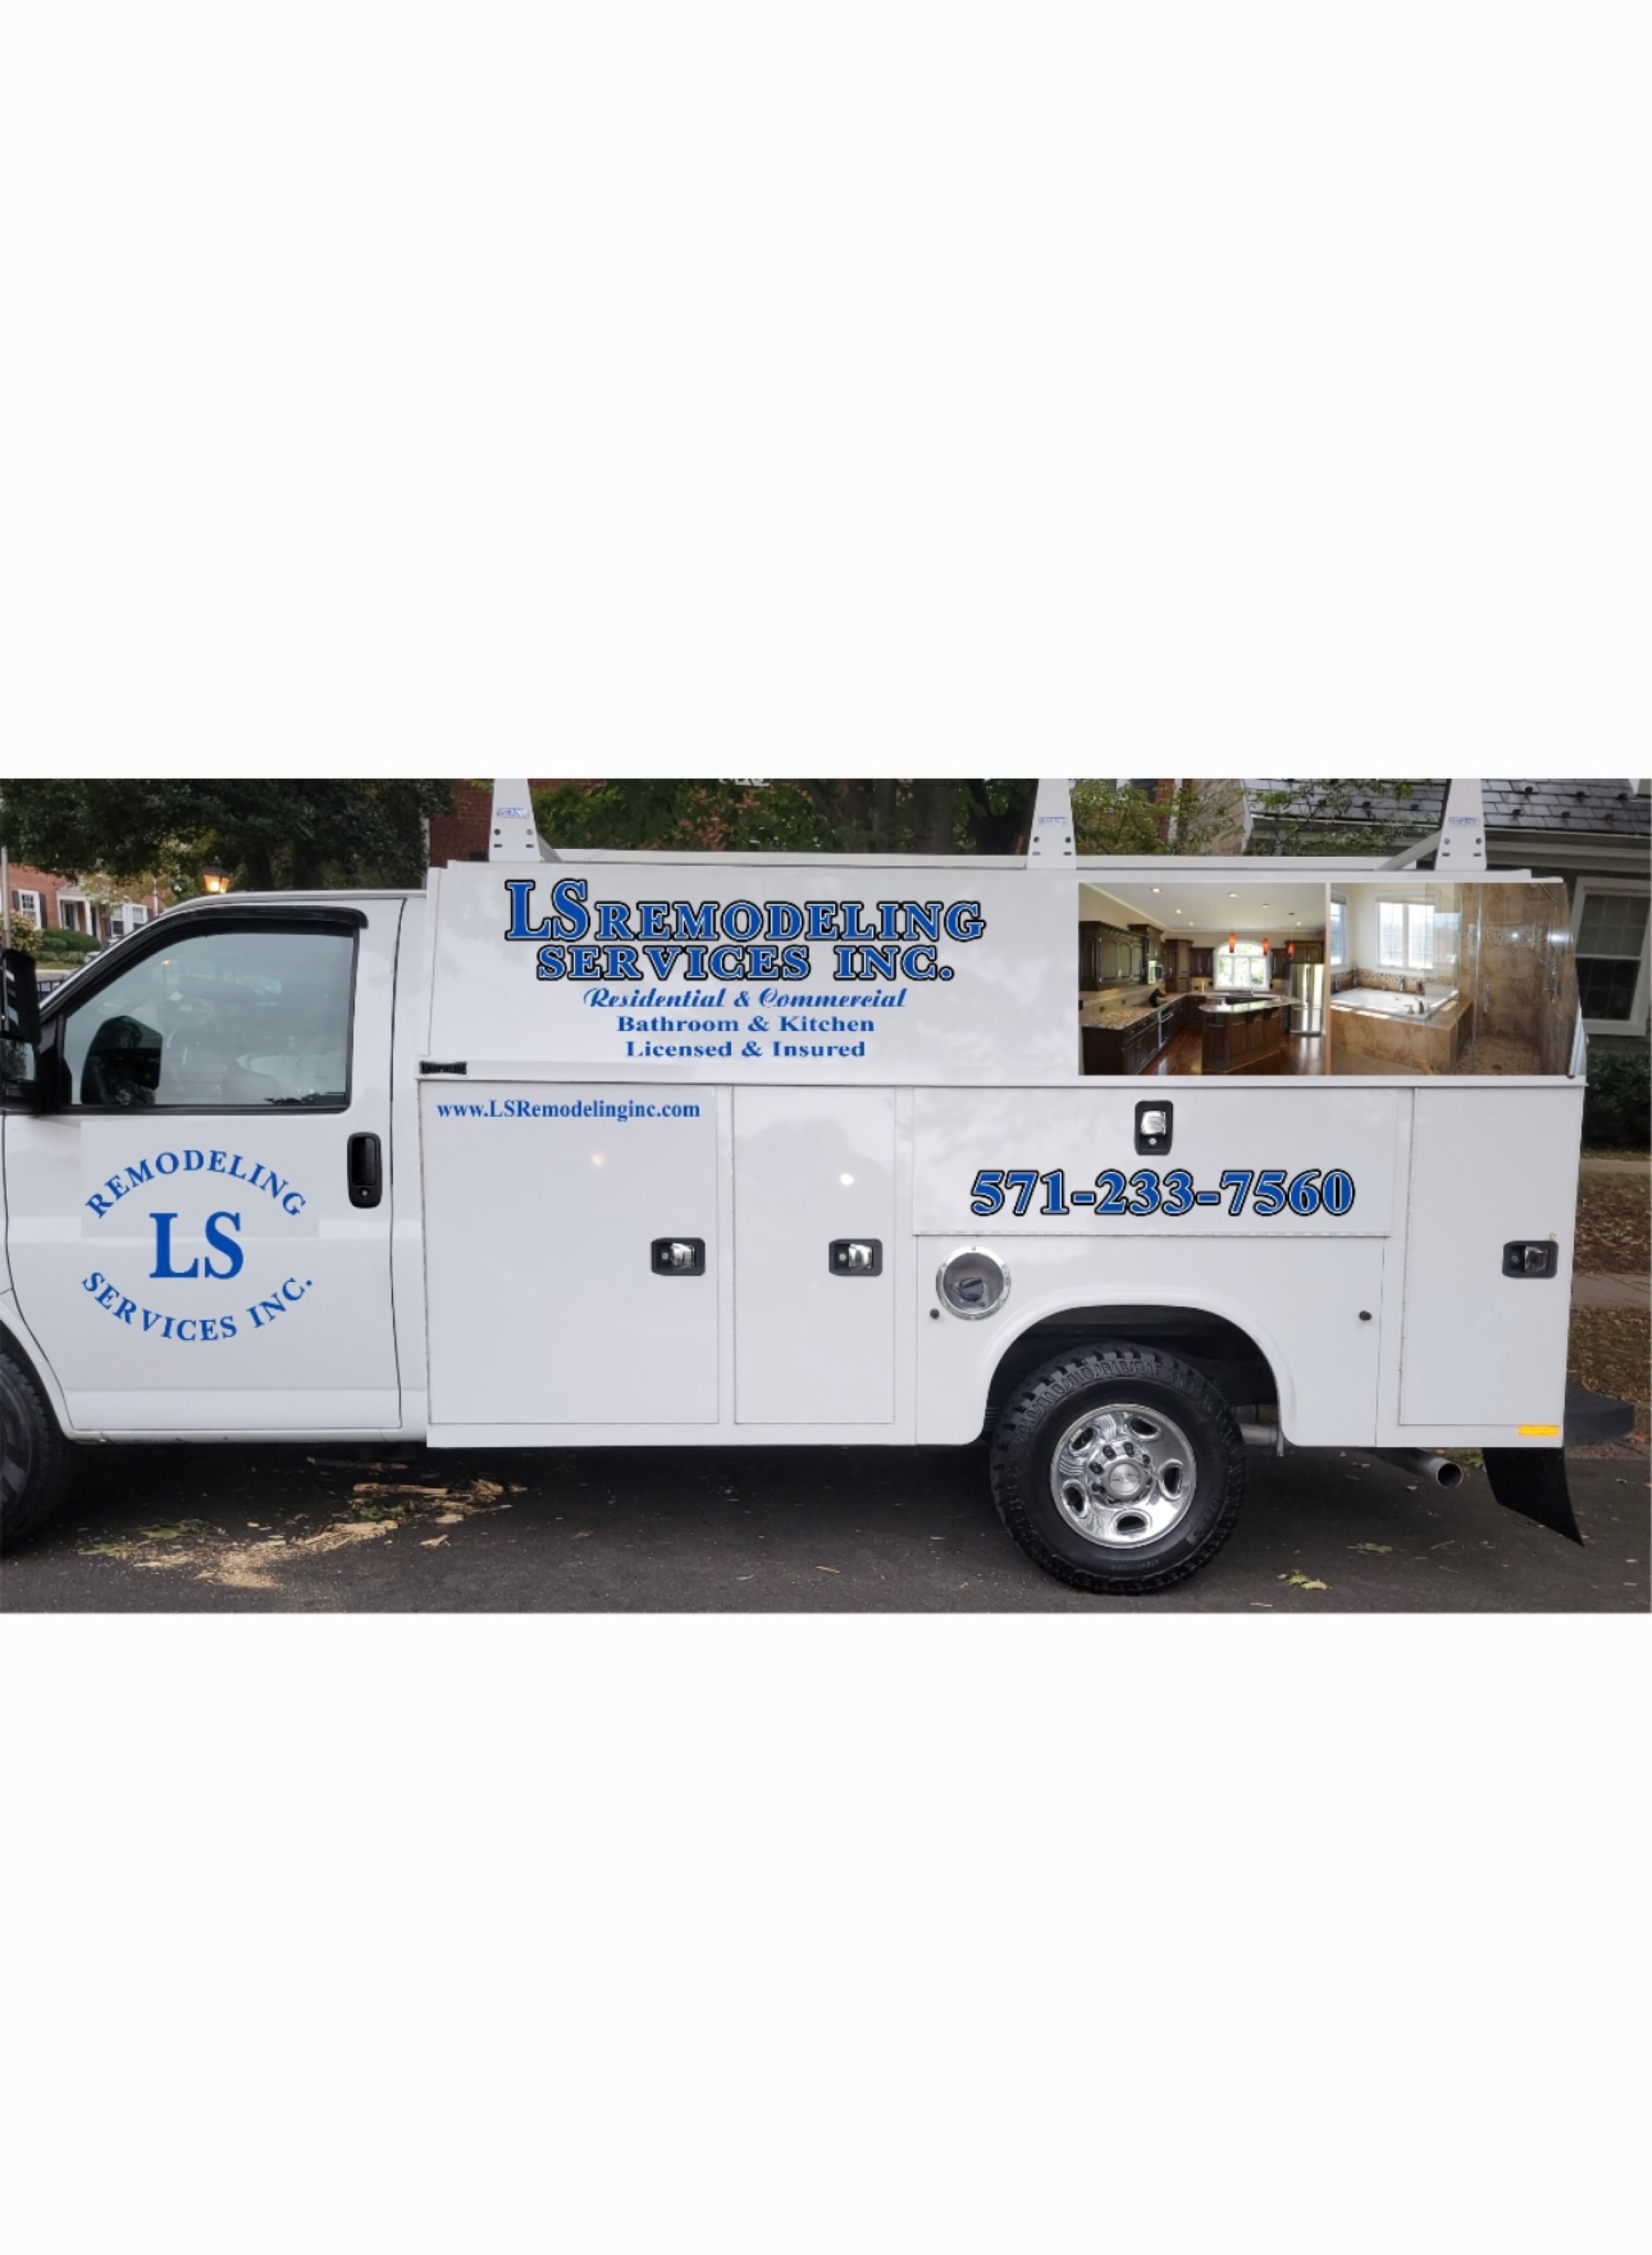 L S Remodeling Services Inc. Logo